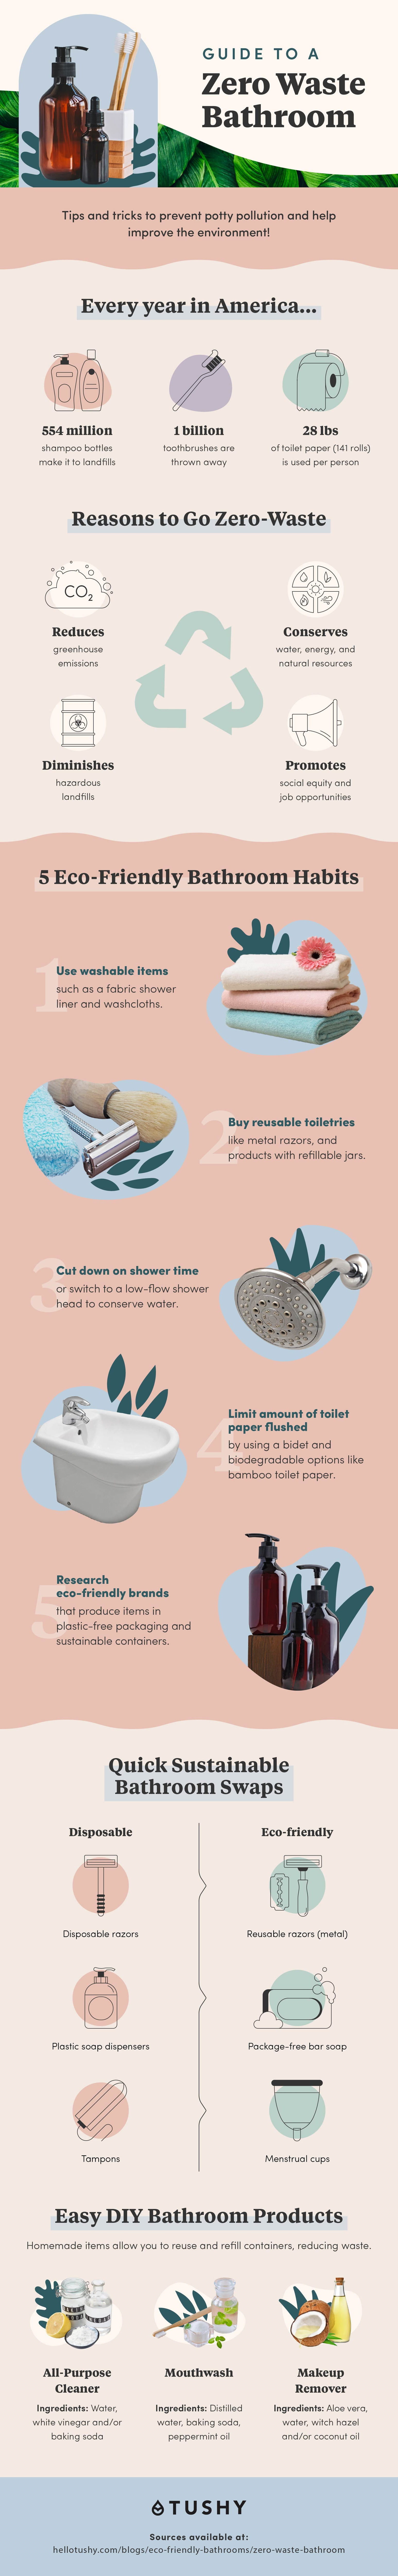 A Guide to a Zero Waste Bathroom